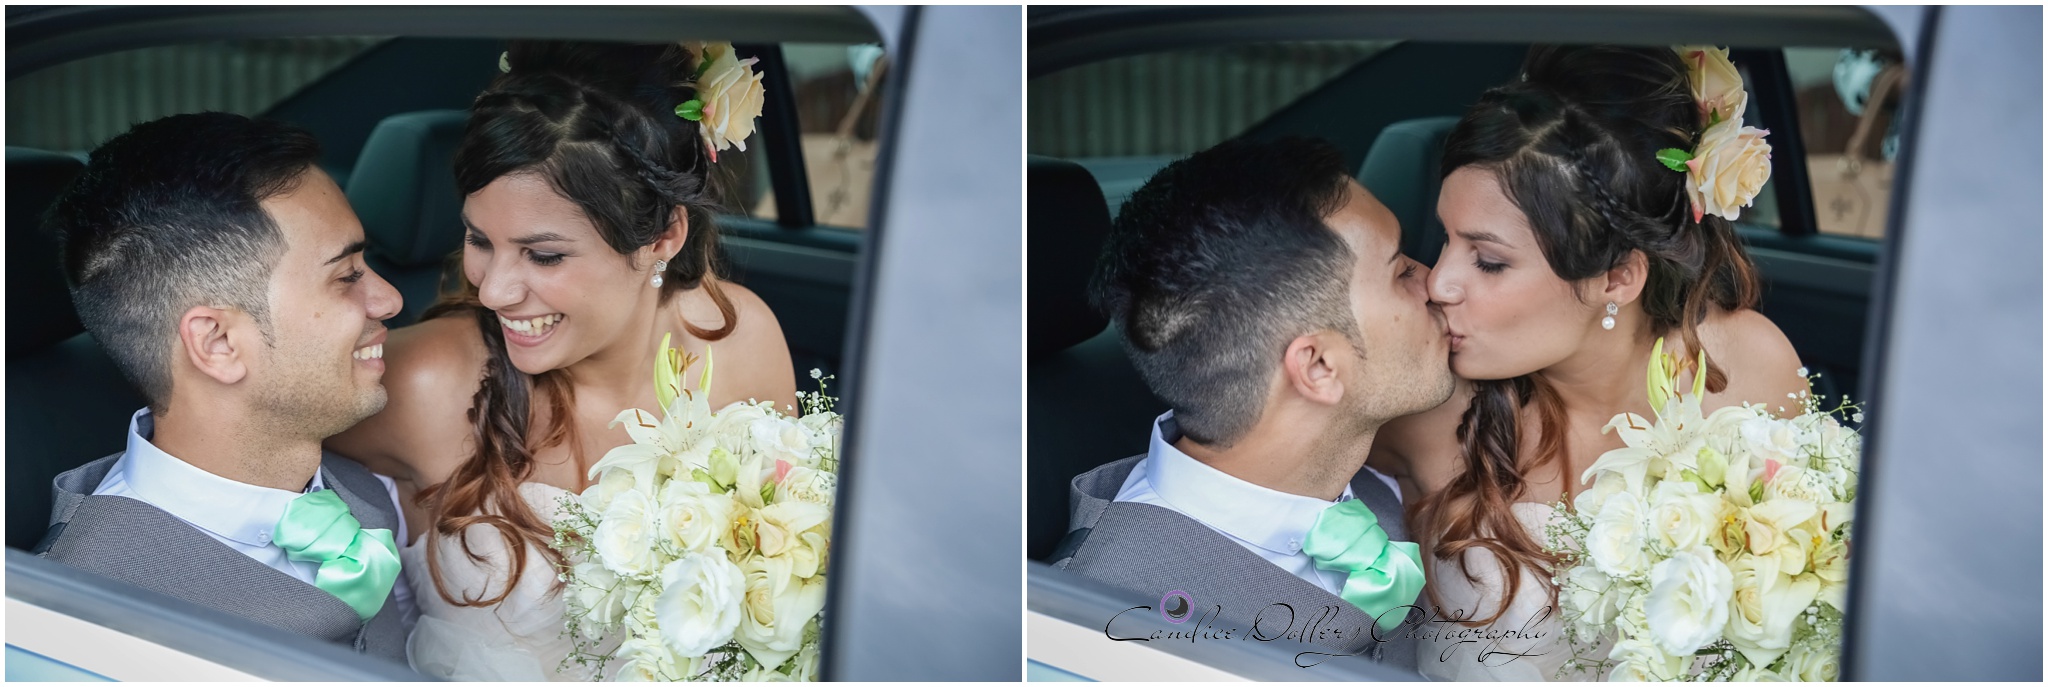 Paula & Jaycee's Wedding - Cypress Dale - Candice Dollery Photography_3064